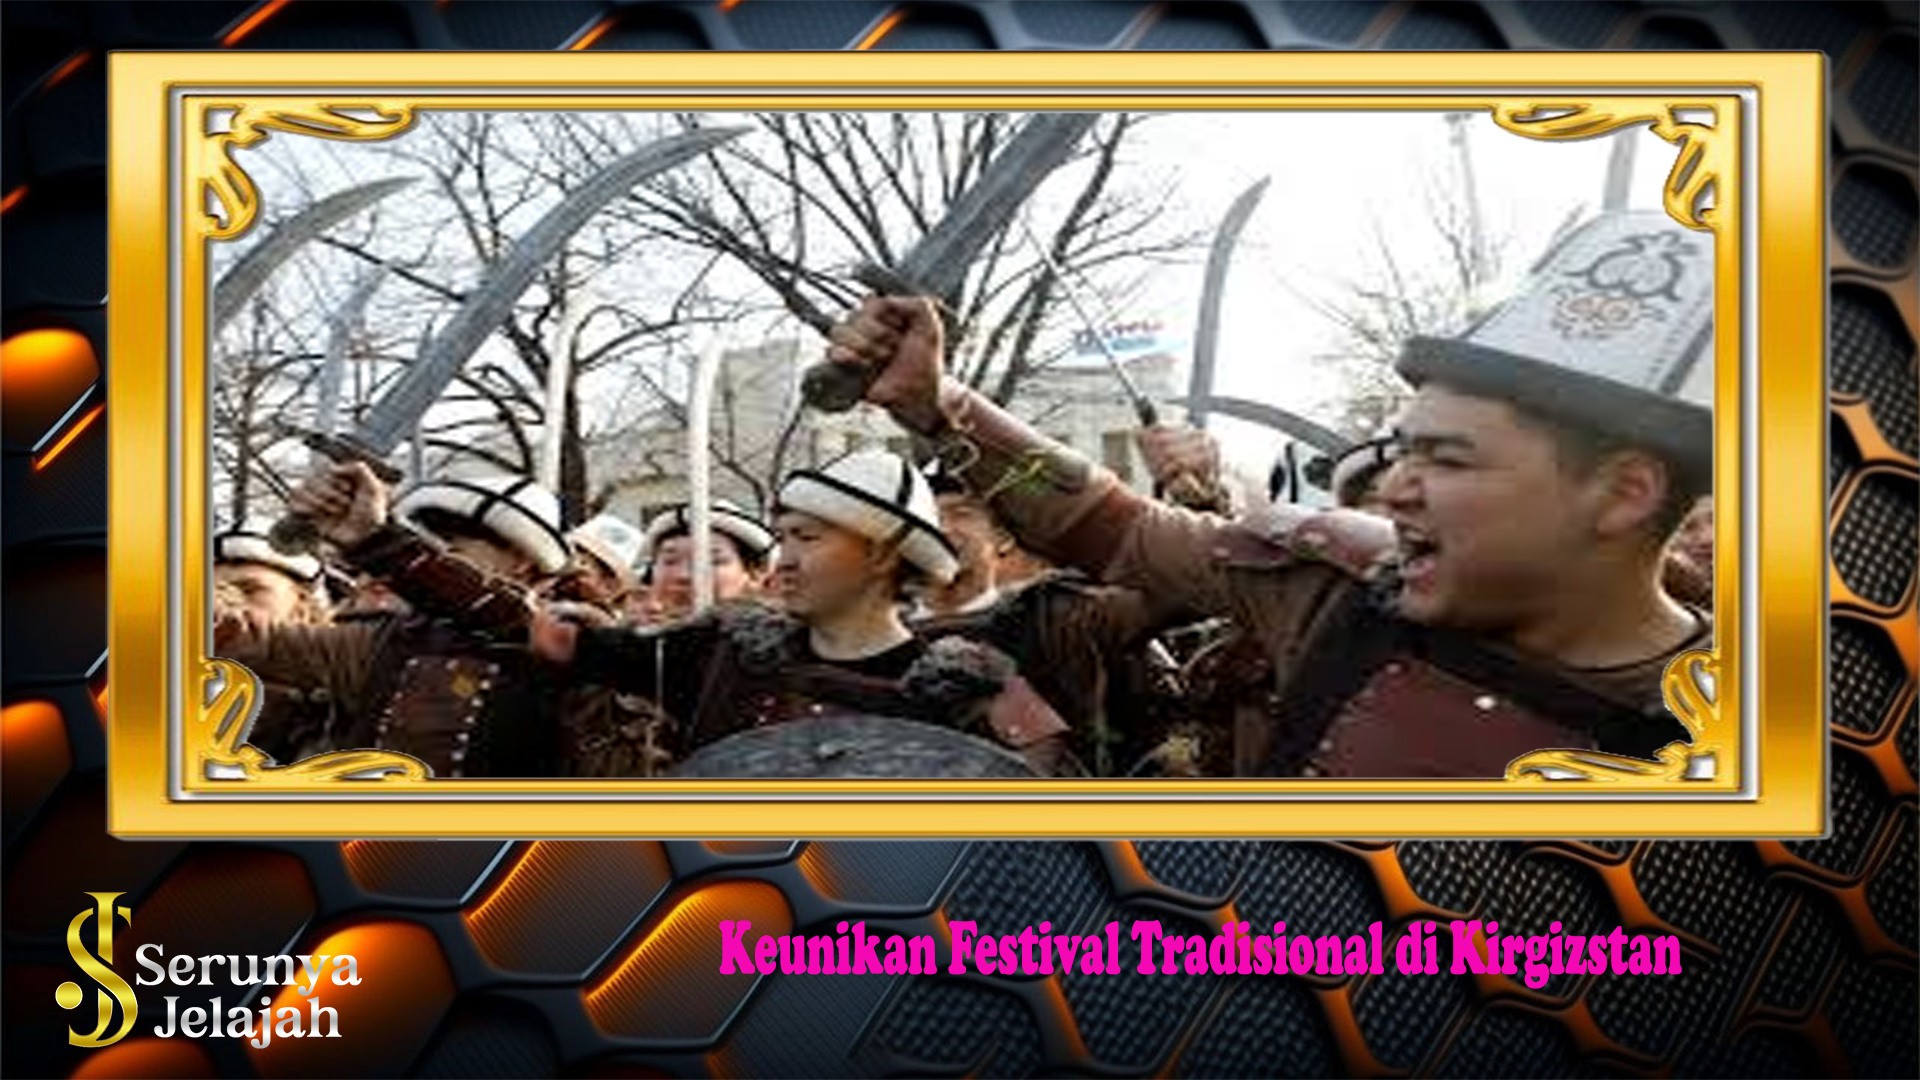 Keunikan Festival Tradisional di Kirgizstan